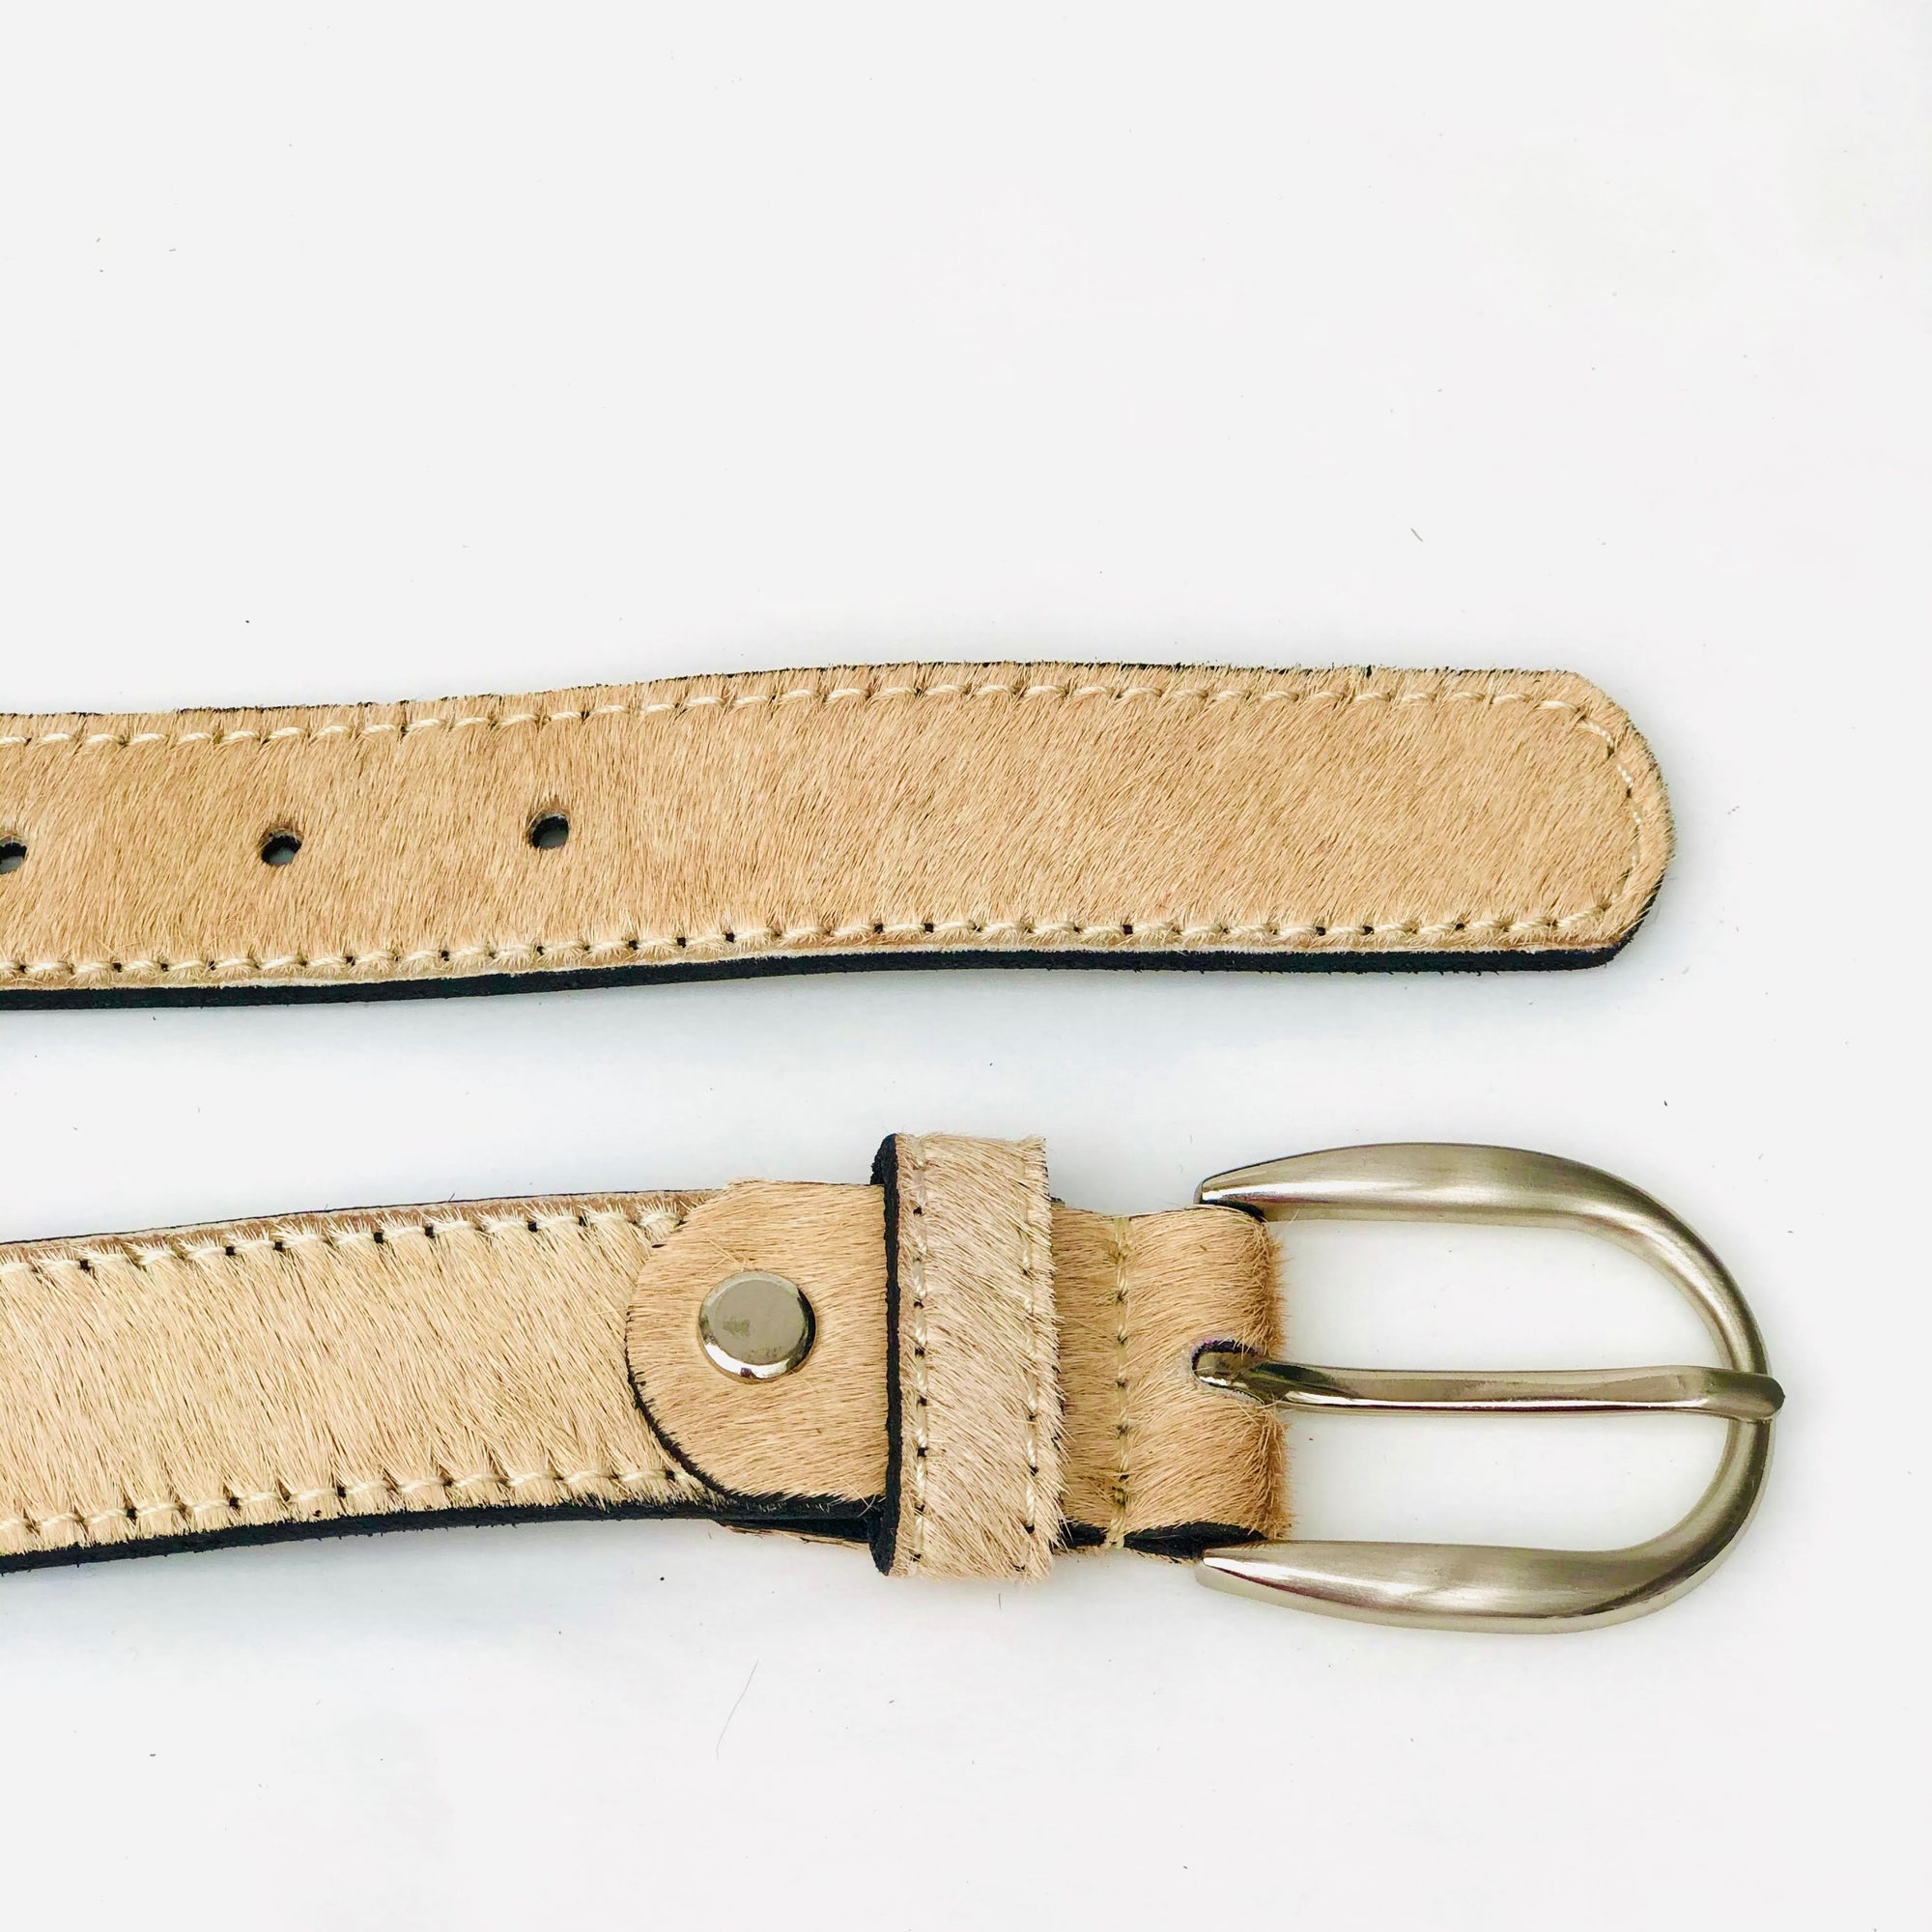 Hair-on-hide Beige leather belt